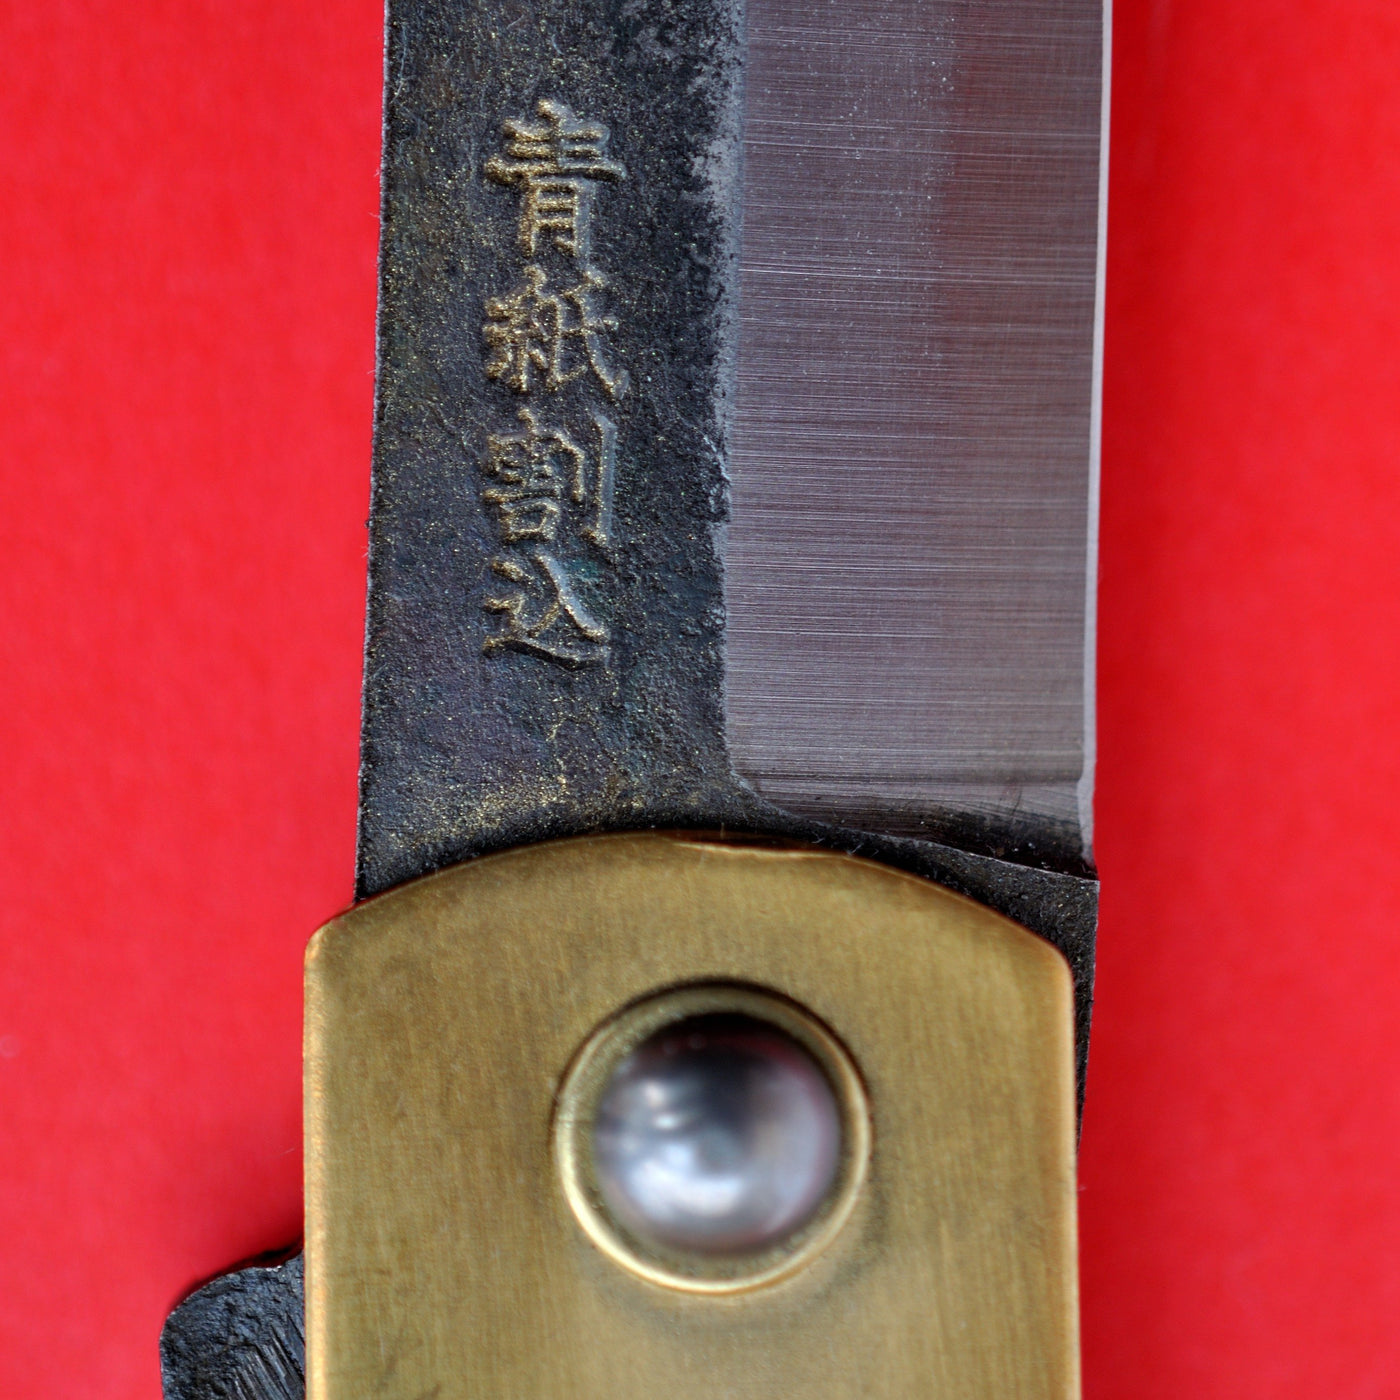 Higonokami Brass Knife